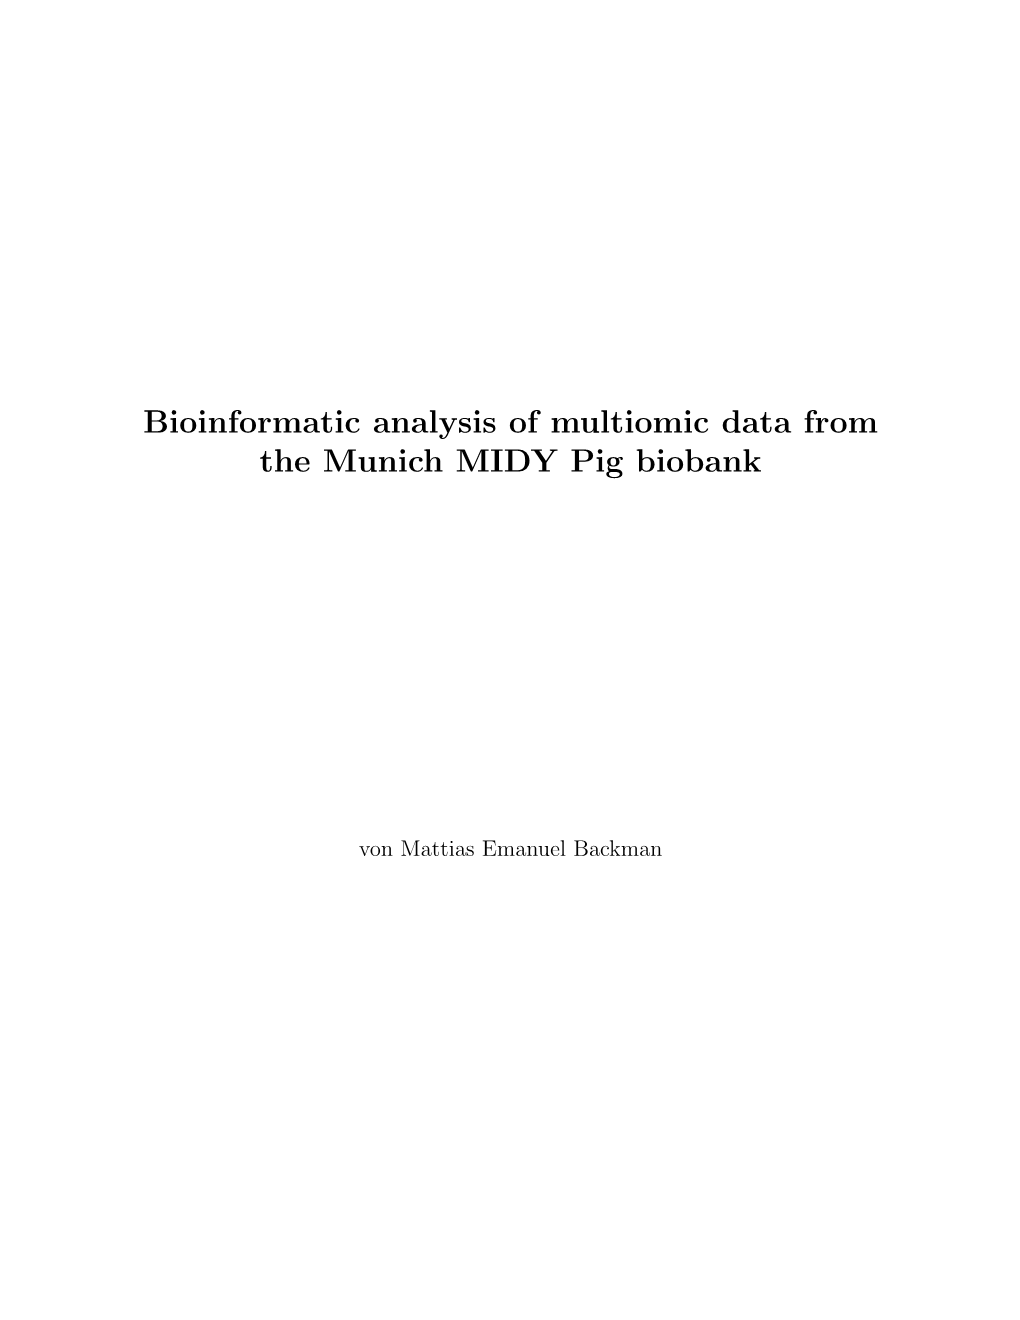 Bioinformatic Analysis of Multiomic Data from the Munich MIDY Pig Biobank